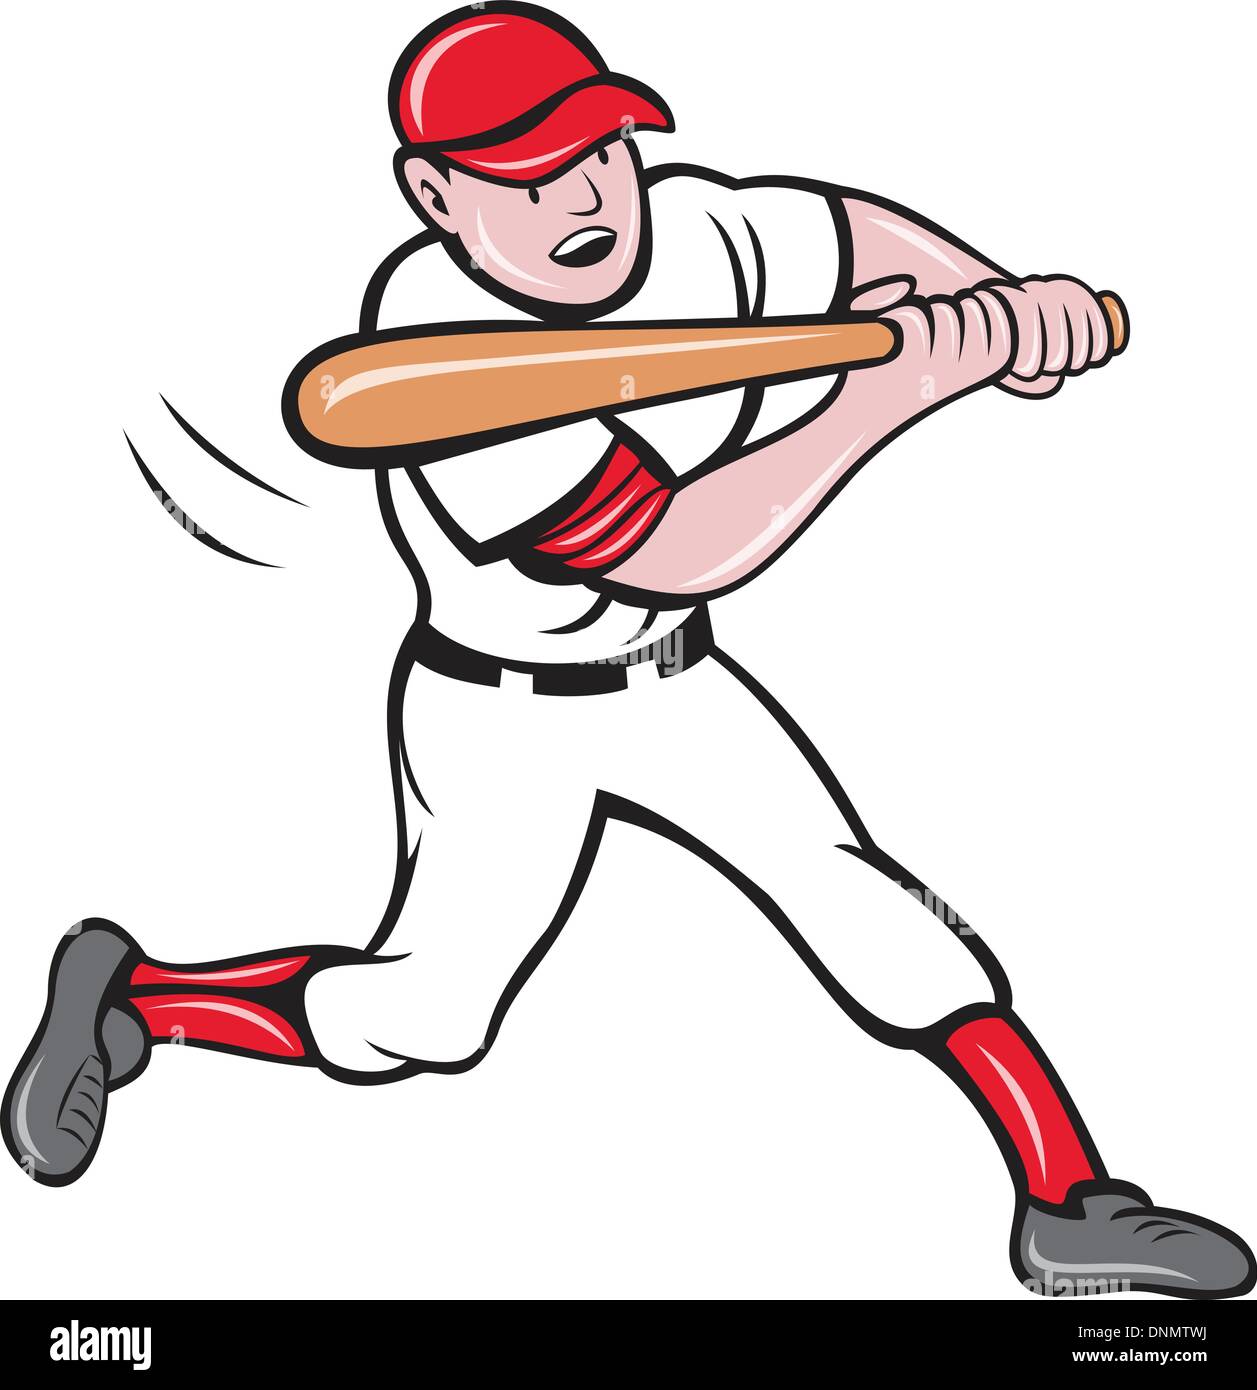 illustration of a baseball player batting cartoon style isolated on white  Stock Vector Image & Art - Alamy